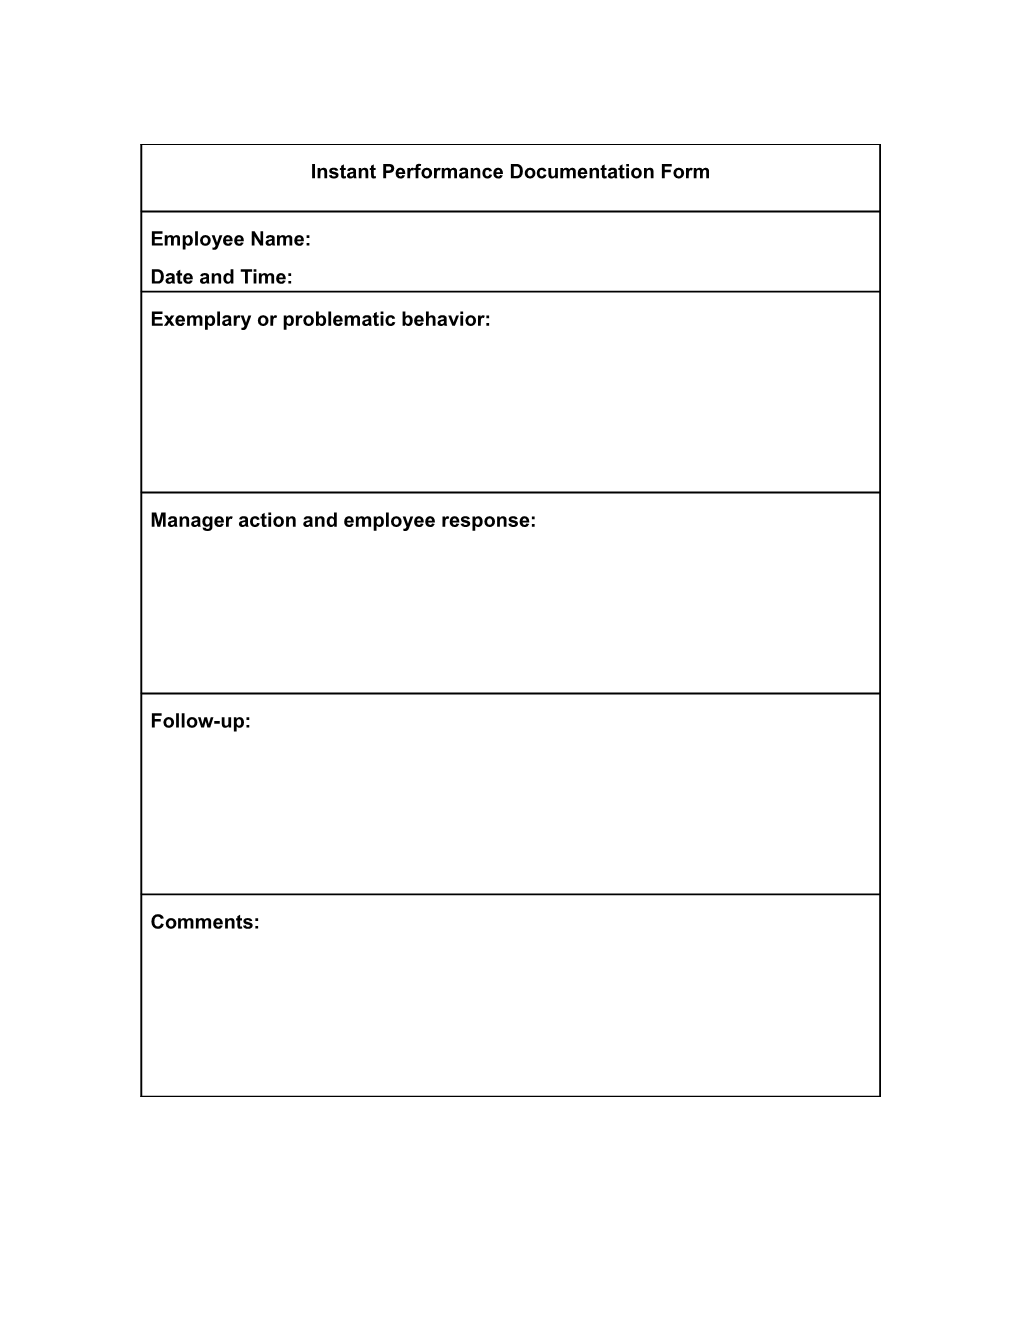 Instant Performance Documentation Form